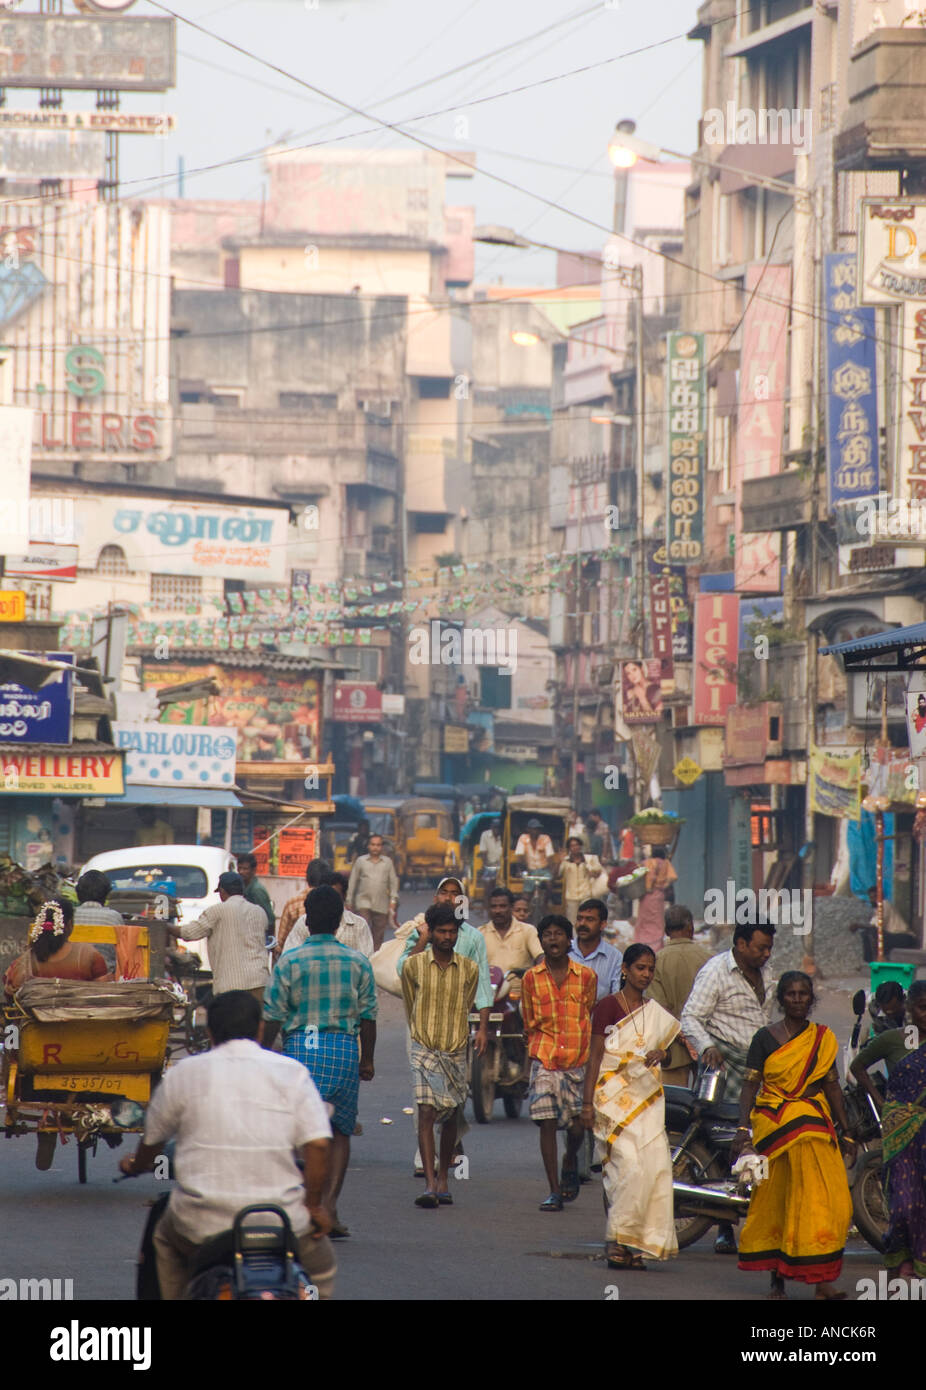 A street scene in Chennai South India Stock Photo